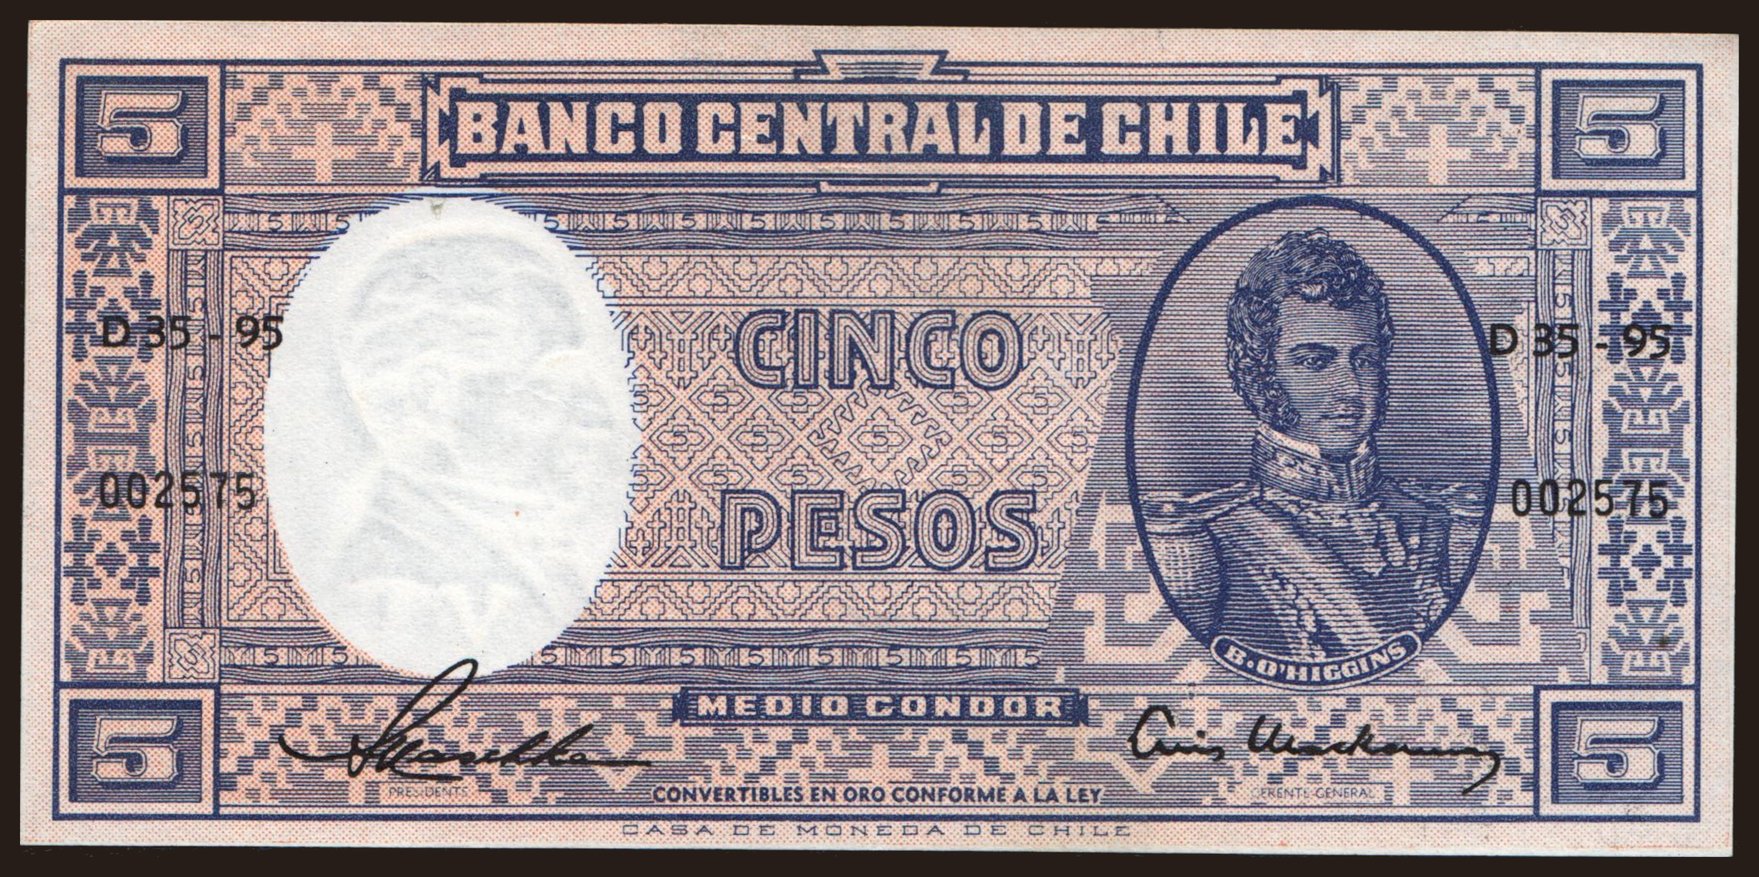 5 pesos, 1958